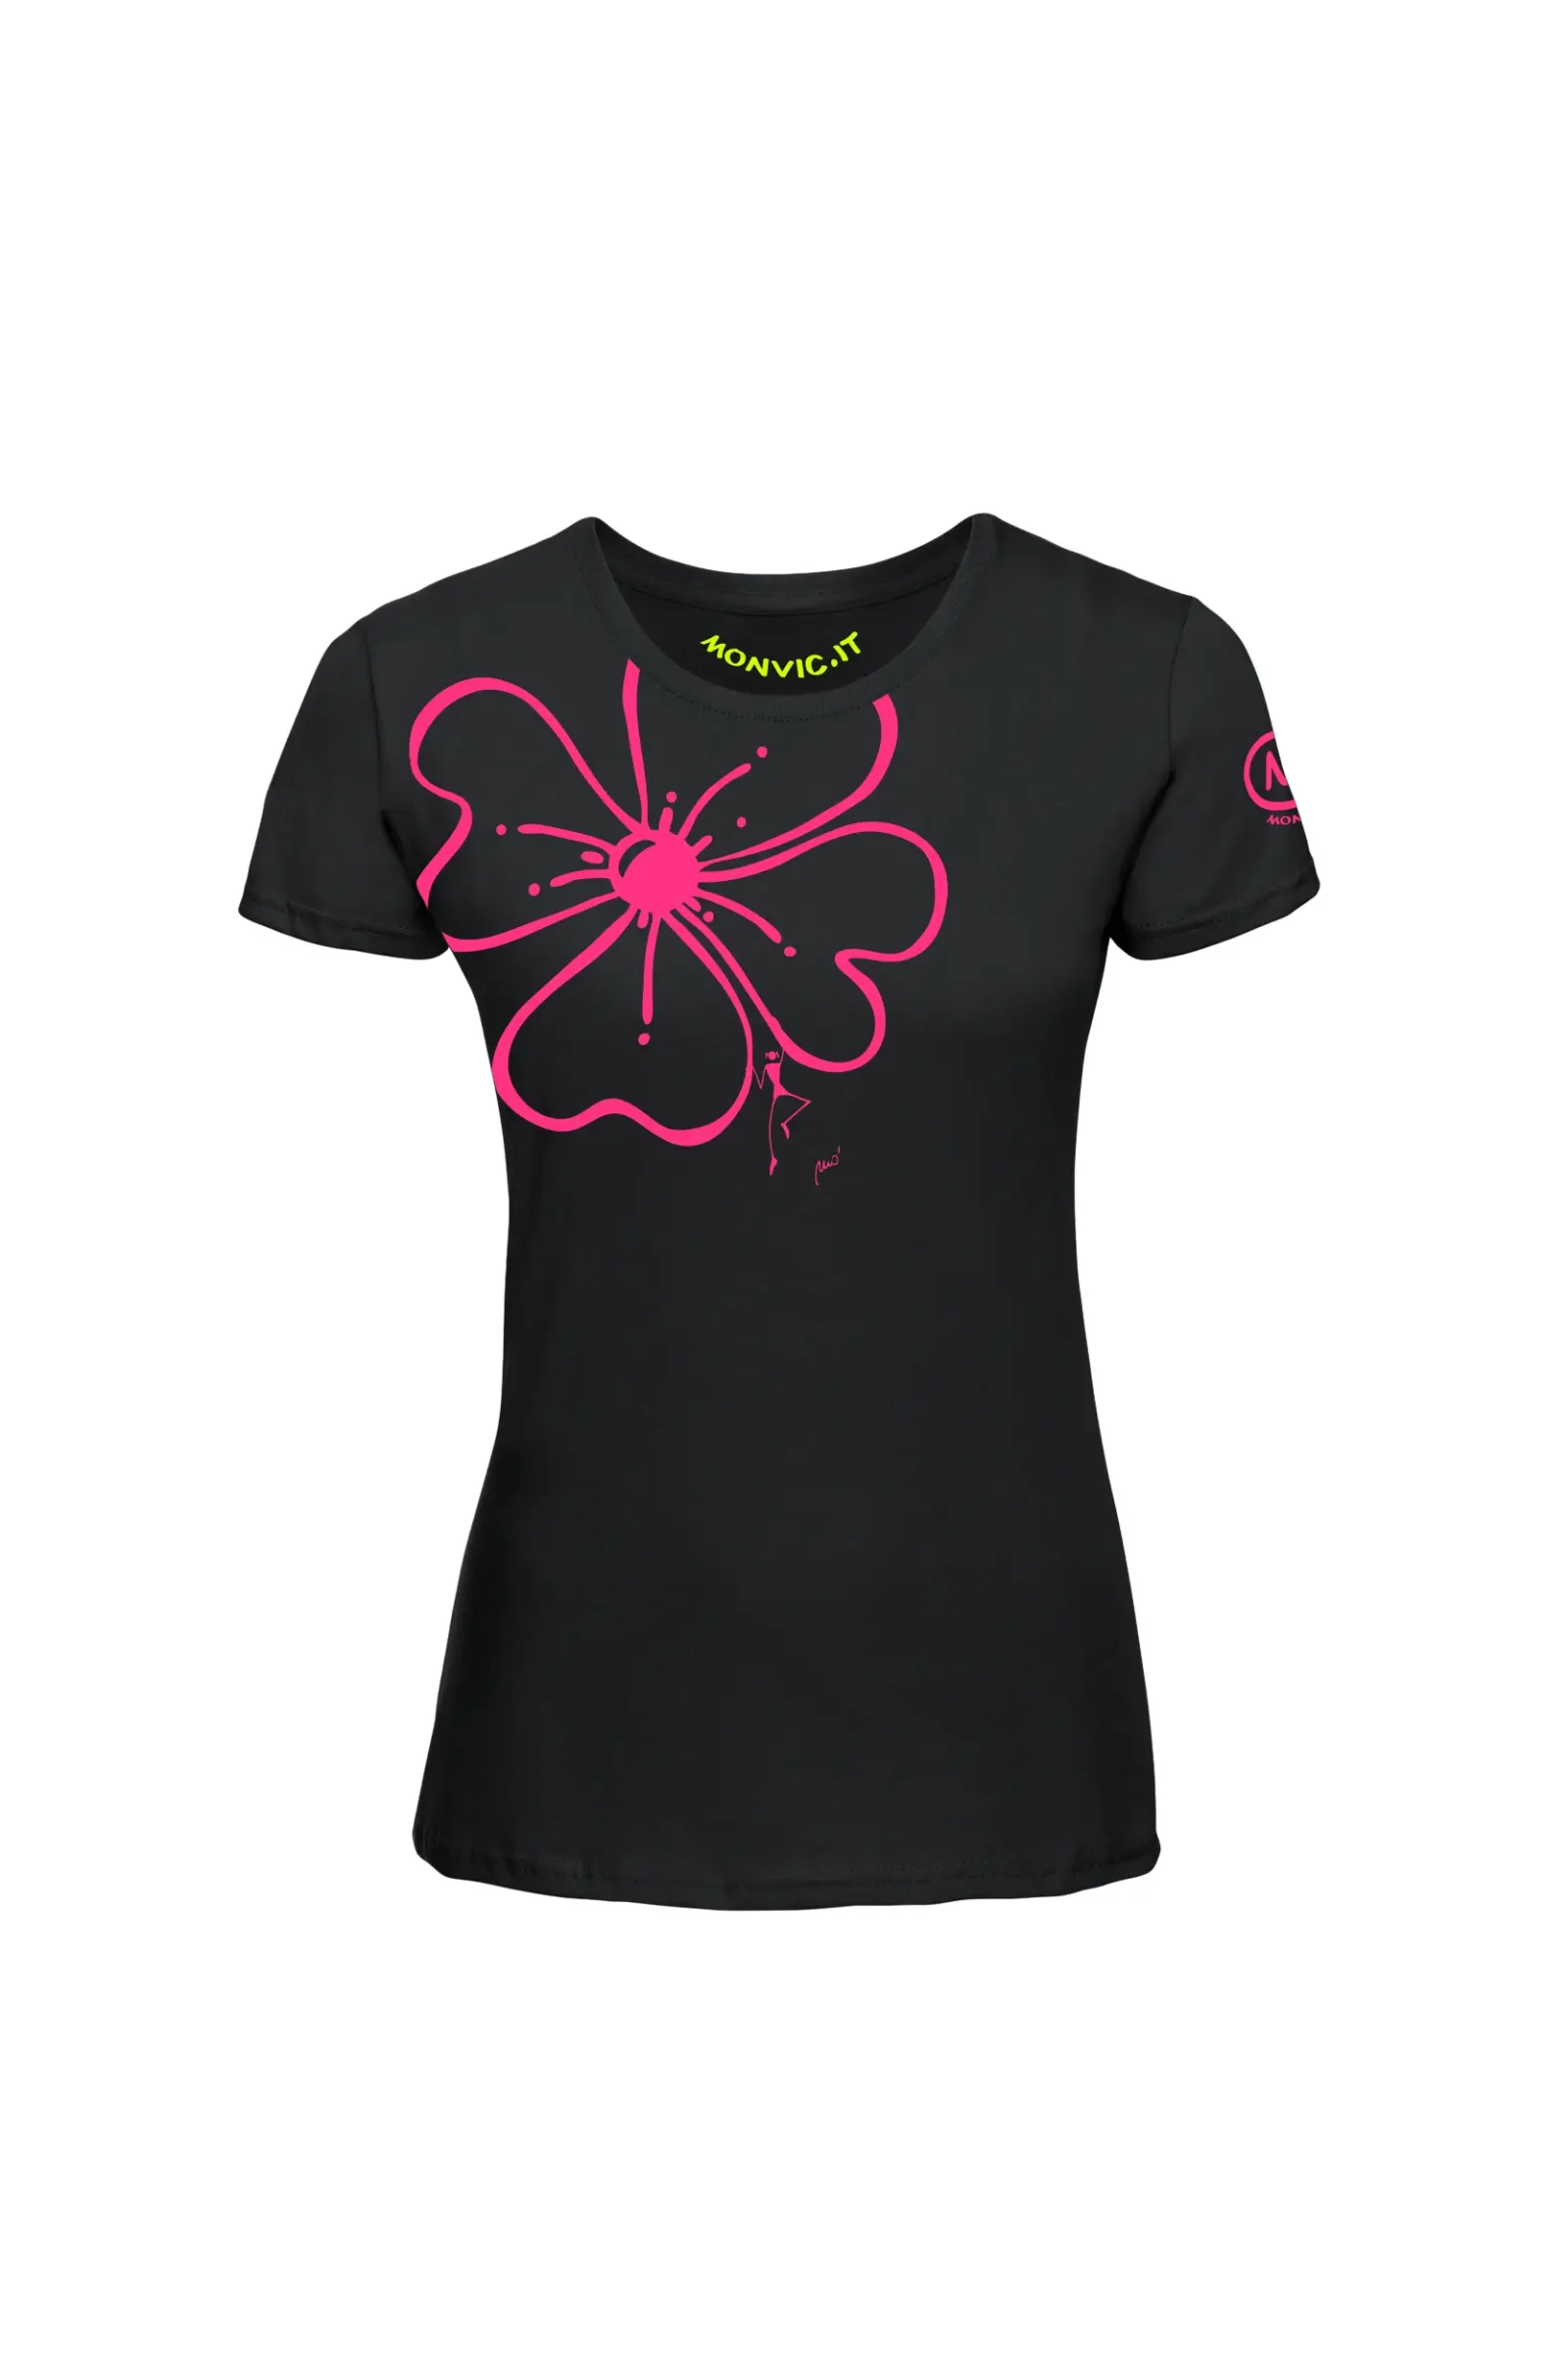 T-shirt escalade femme - coton noir - "Superflower" SHARON MONVIC